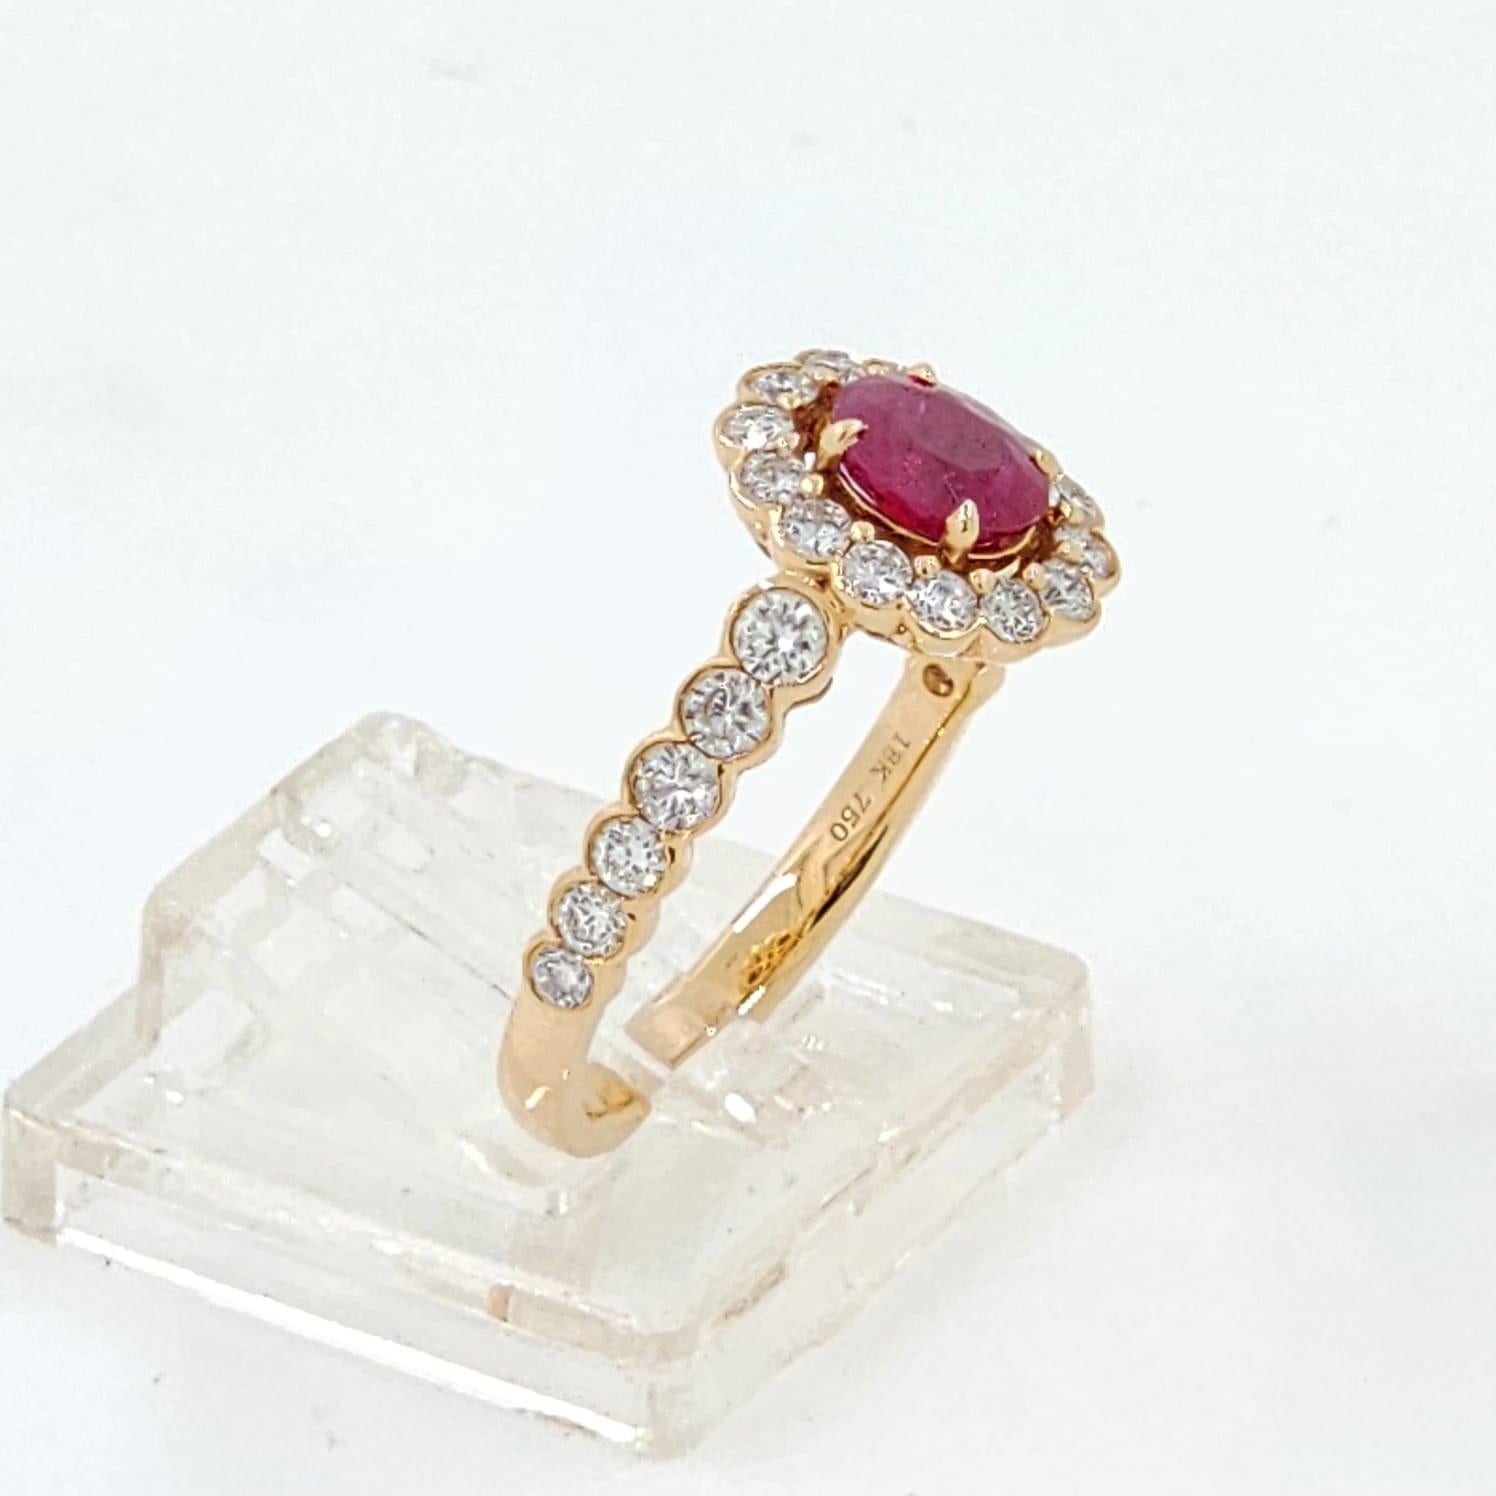 Oval Cut IGI 0.82 Carat Ruby Diamond Ring in 18K Rose Gold For Sale